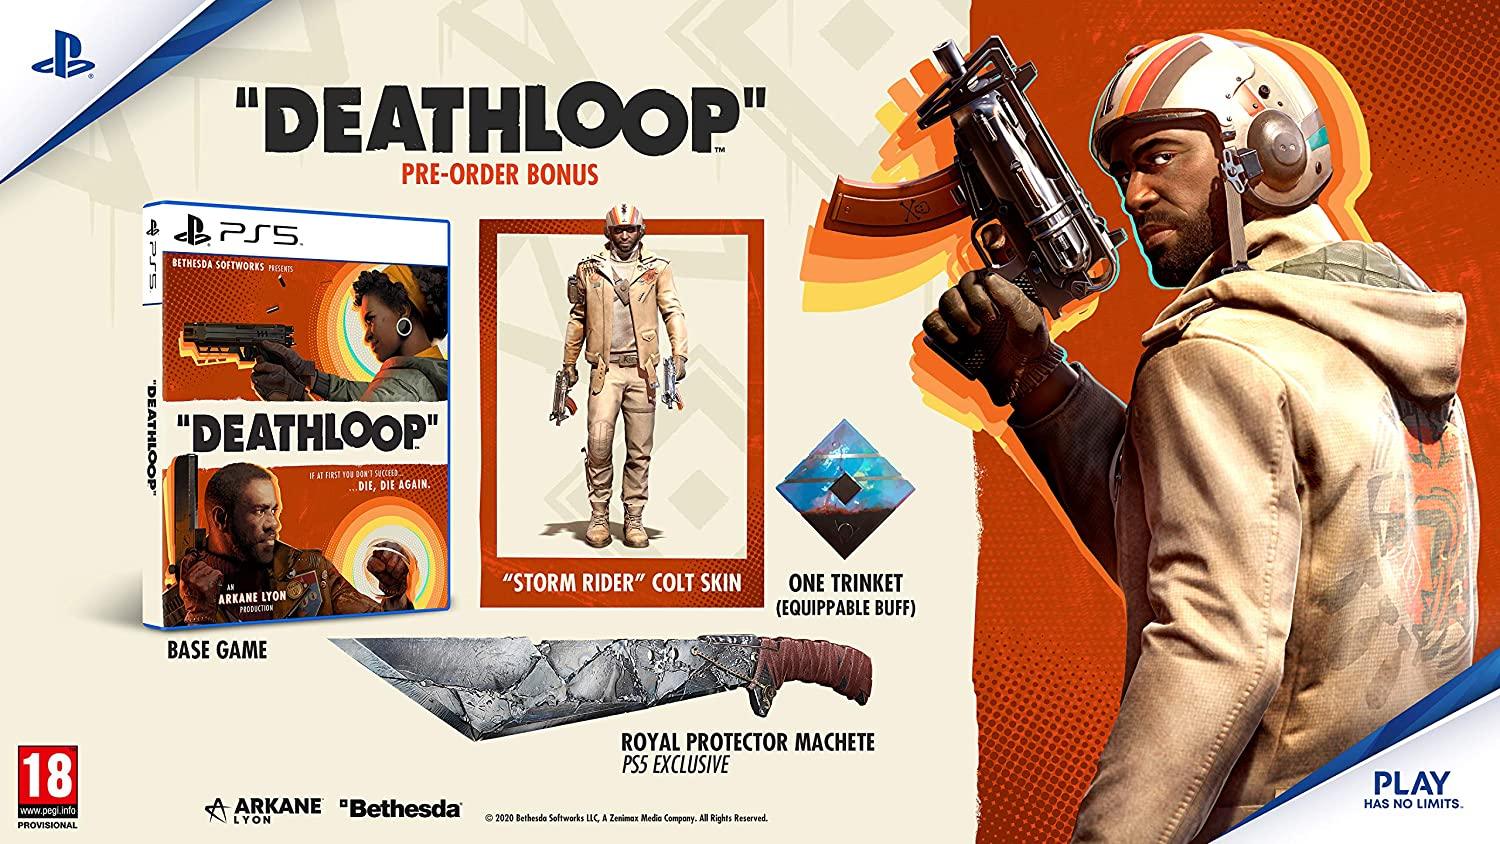 Deathloop (PS5) - GameStore.mt | Powered by Flutisat